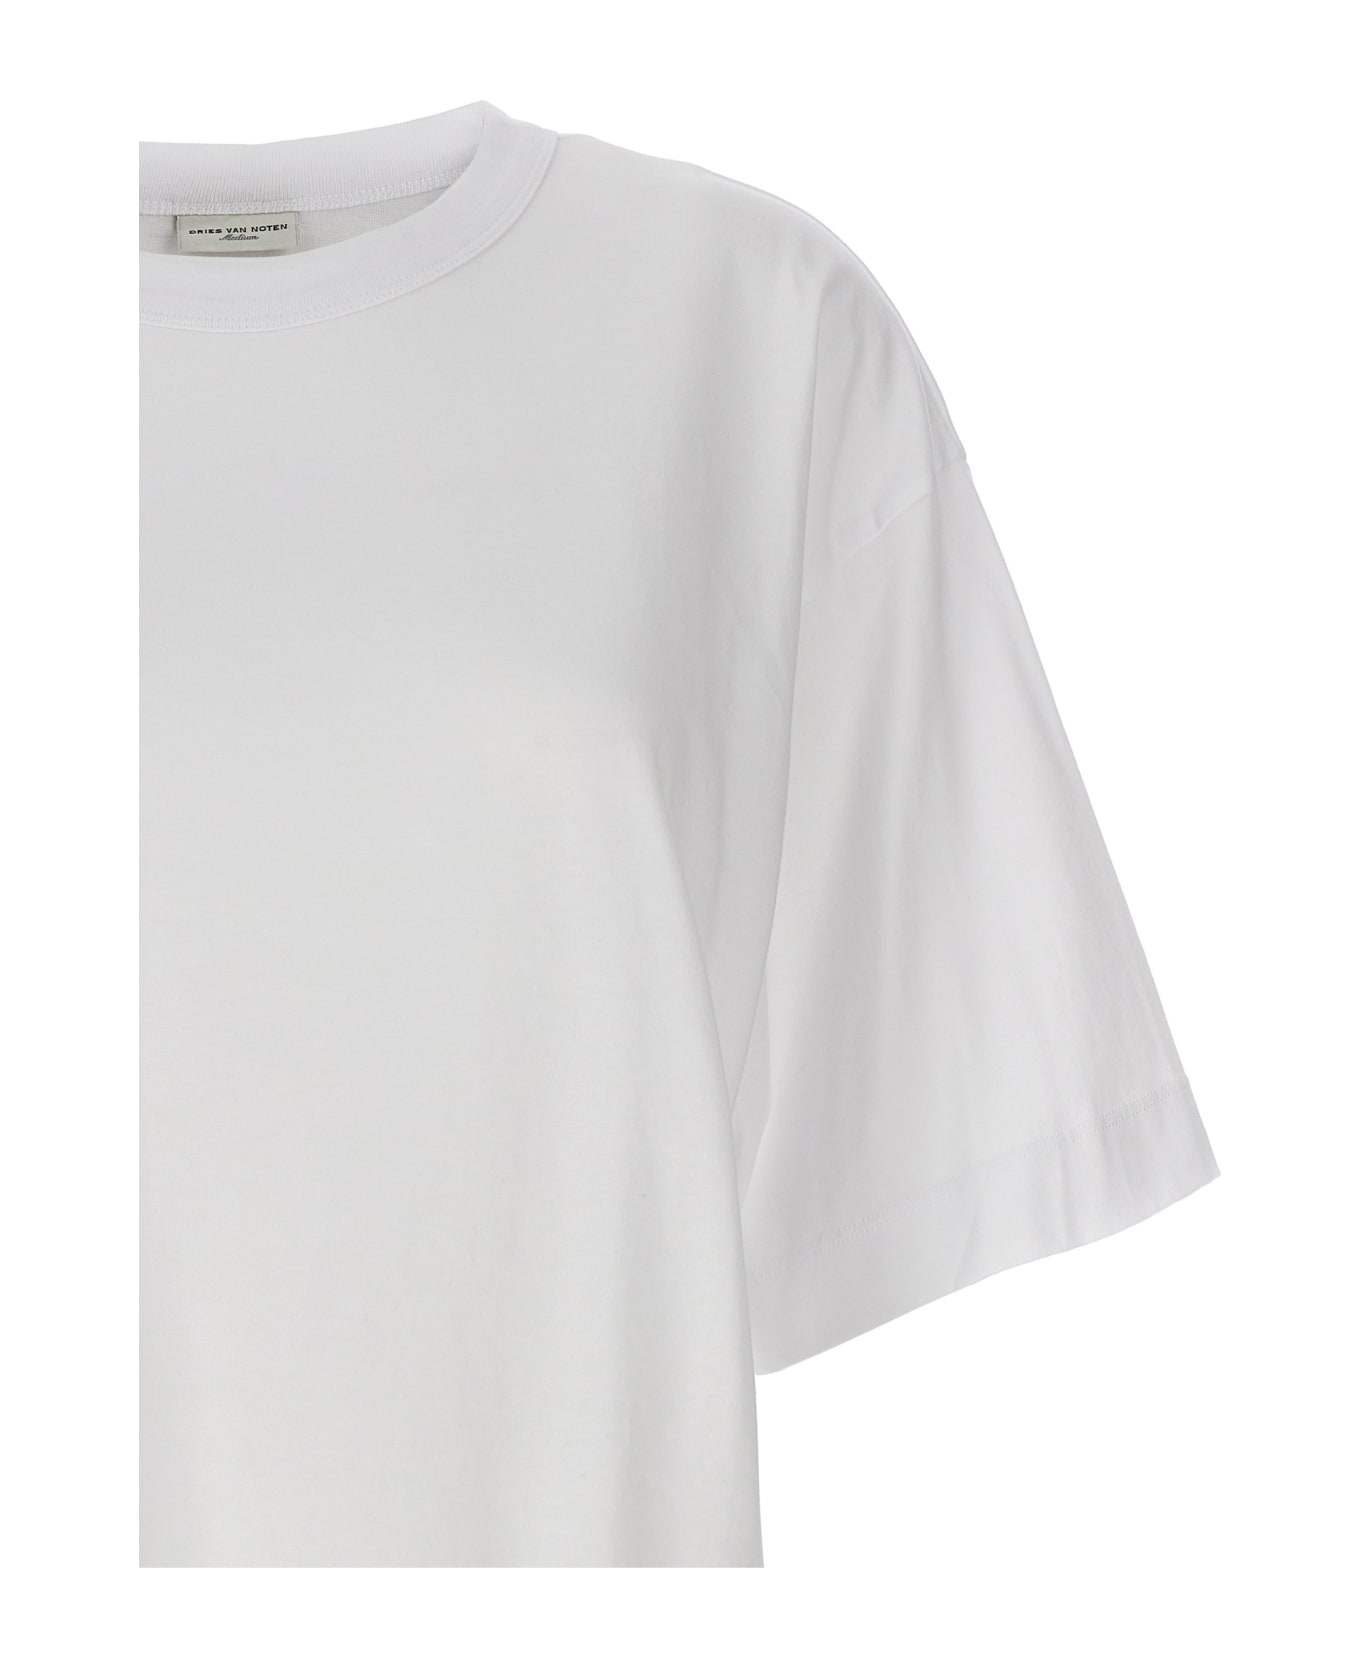 Dries Van Noten 'hegels' T-shirt - White